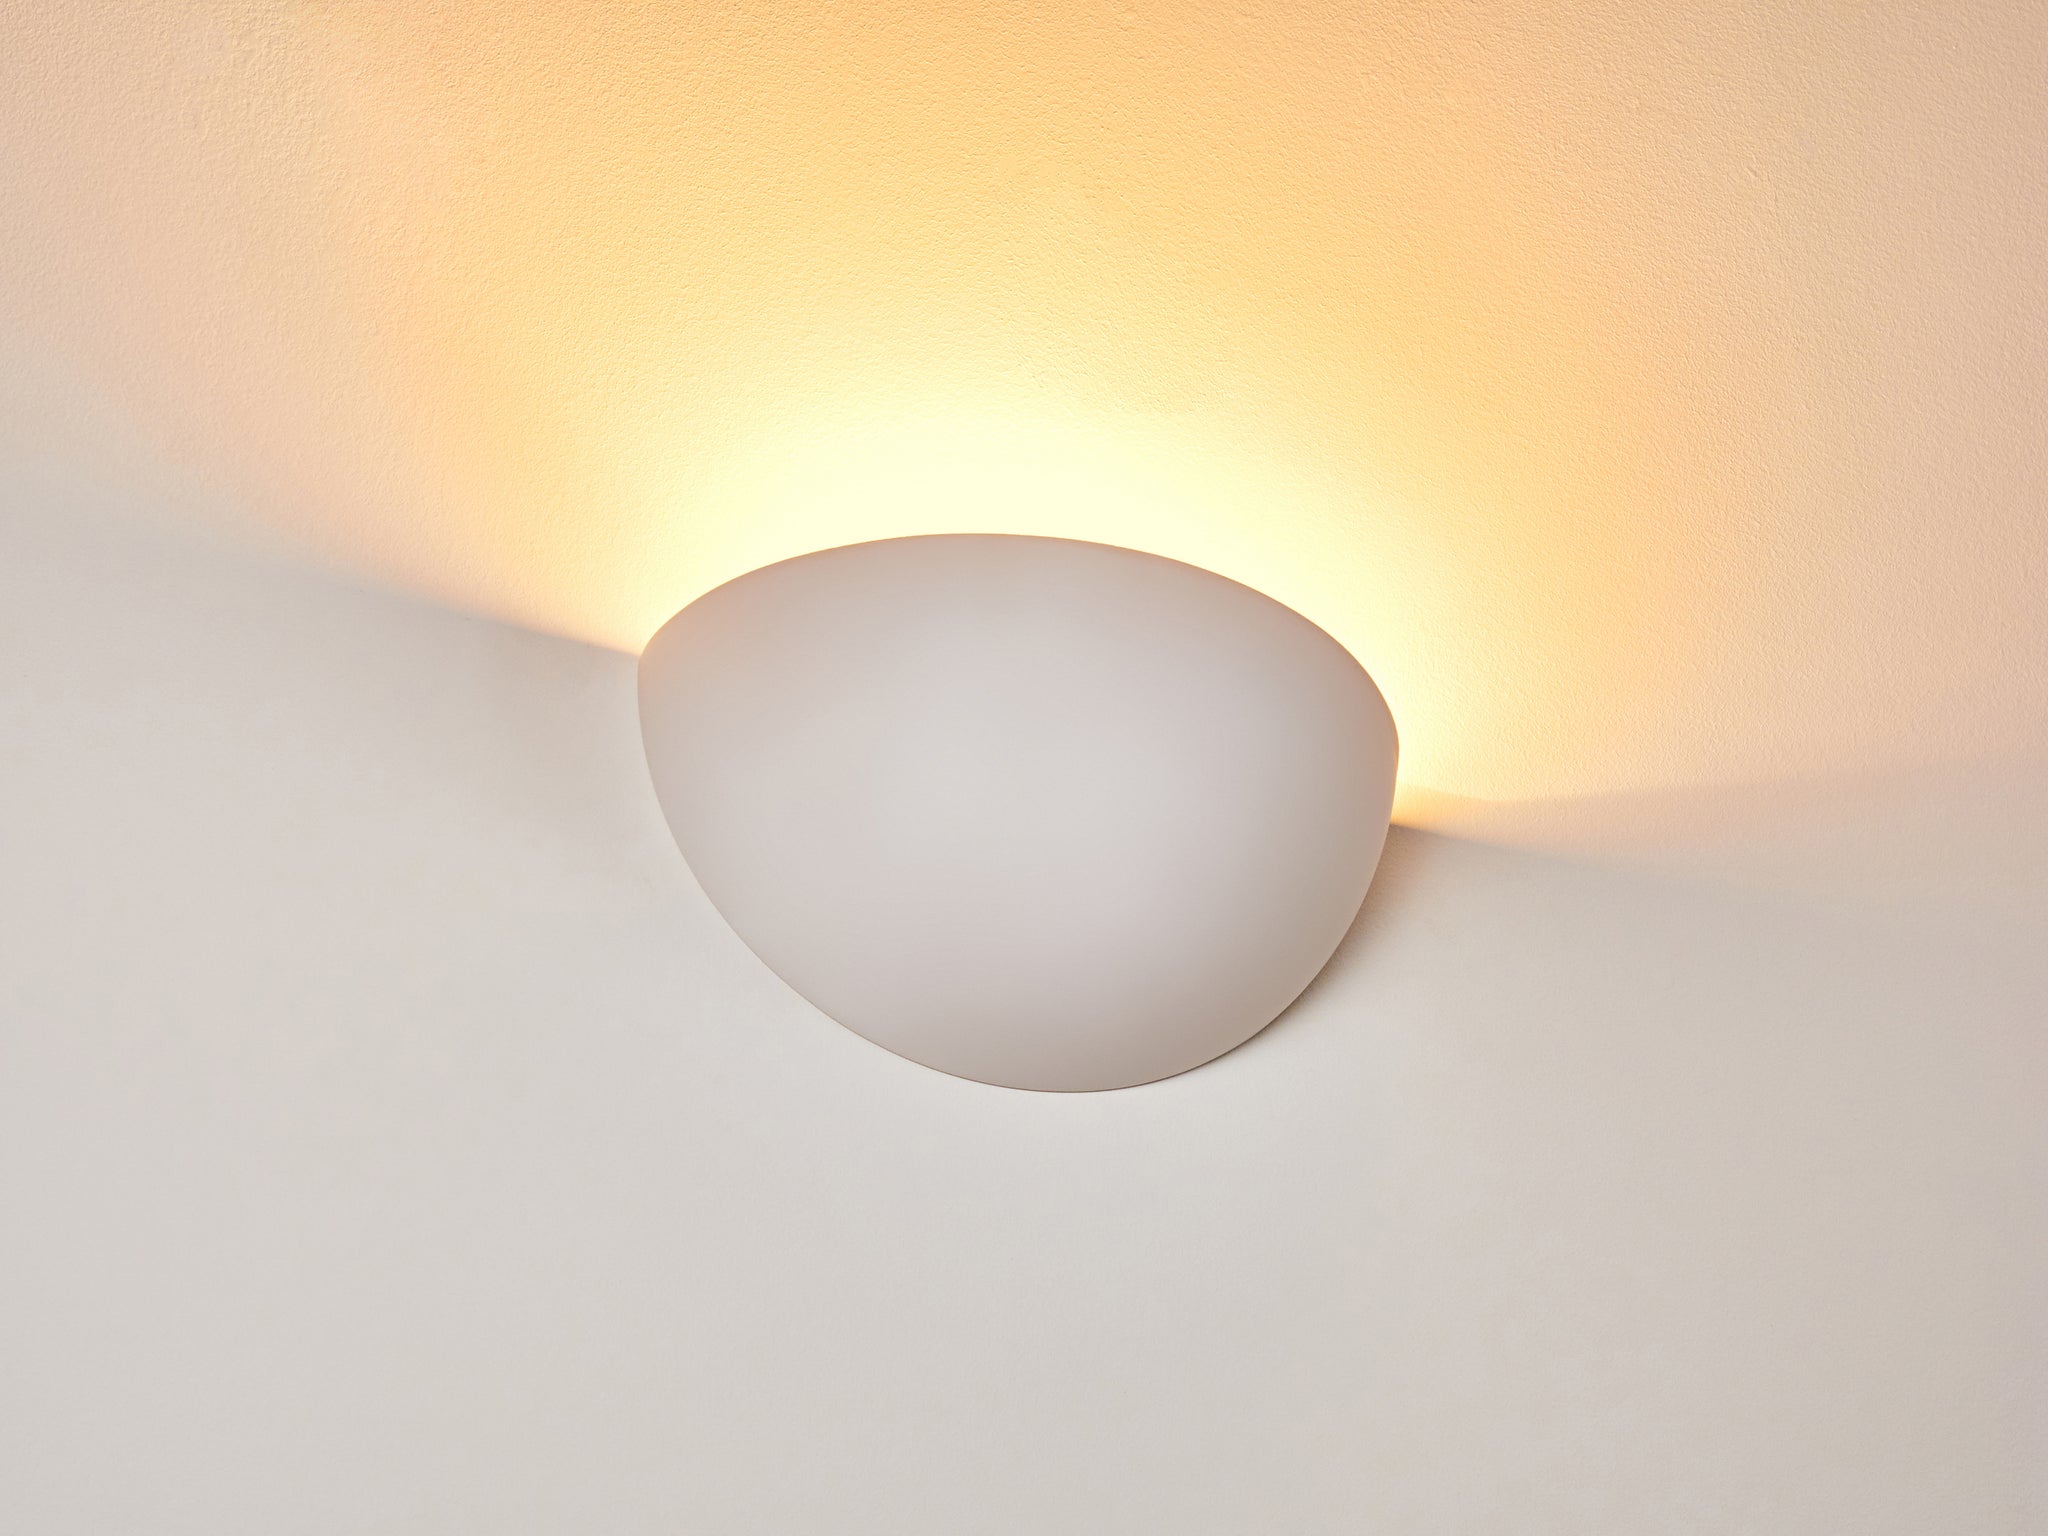 Ceramic Wall Light Bowl Shaped, Uplighter White Paintable Finish E14 socket (NO BULB)